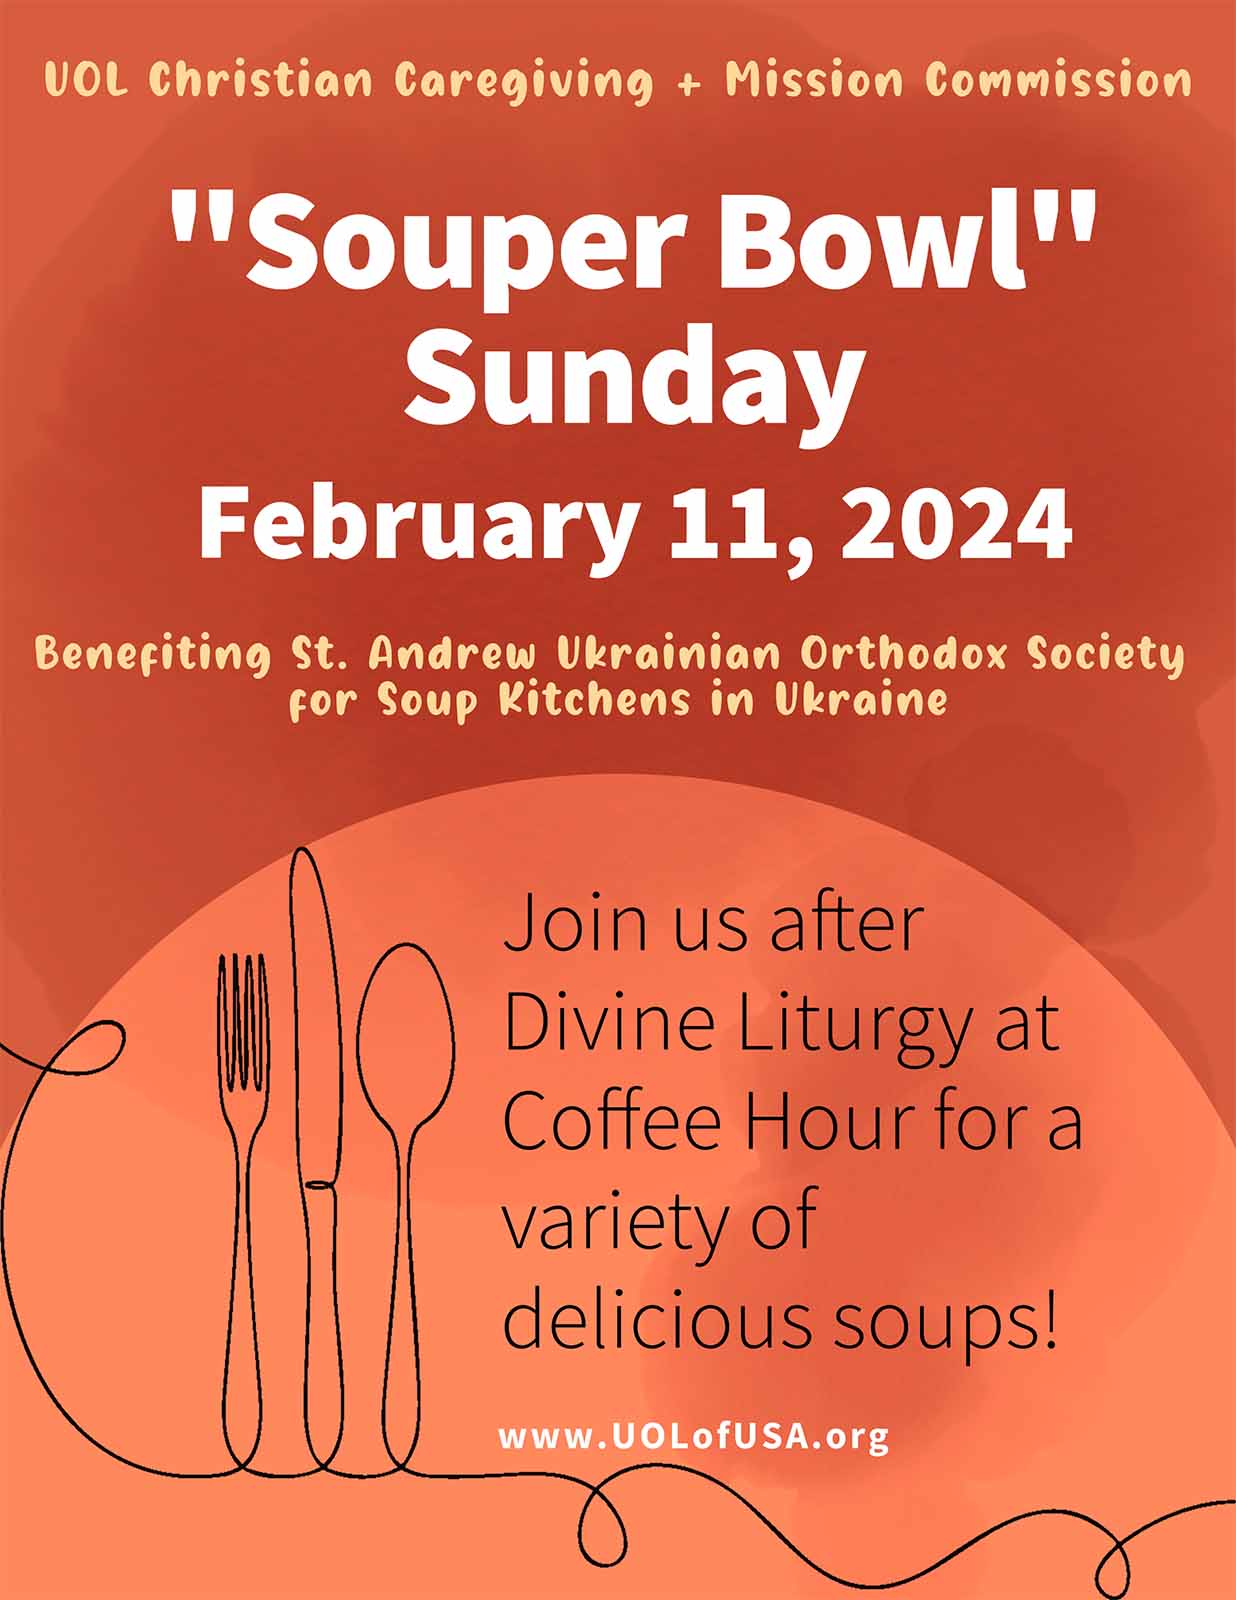 UOL Christian Caregiving - "Souper Bowl" Sunday - February 11, 2024